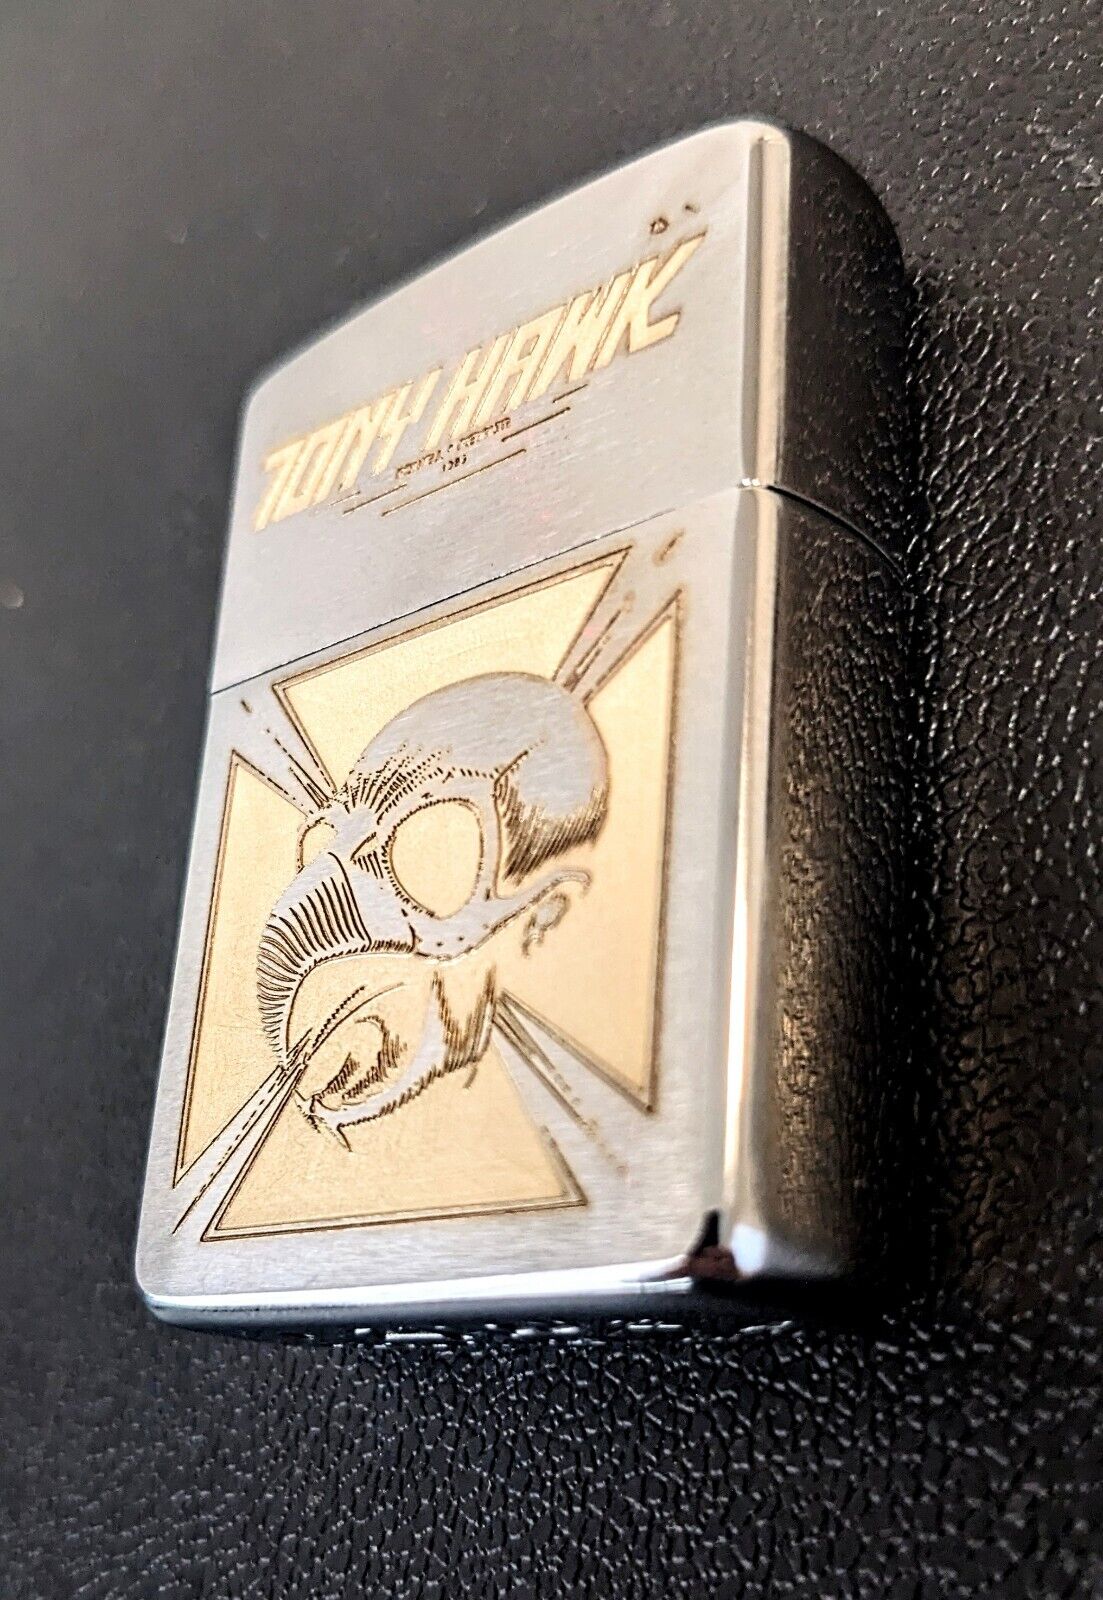 Tony Hawk Limited ARMOR Chrome Zippo Lighter 1980s Skate Nostalgia Unfired Euc